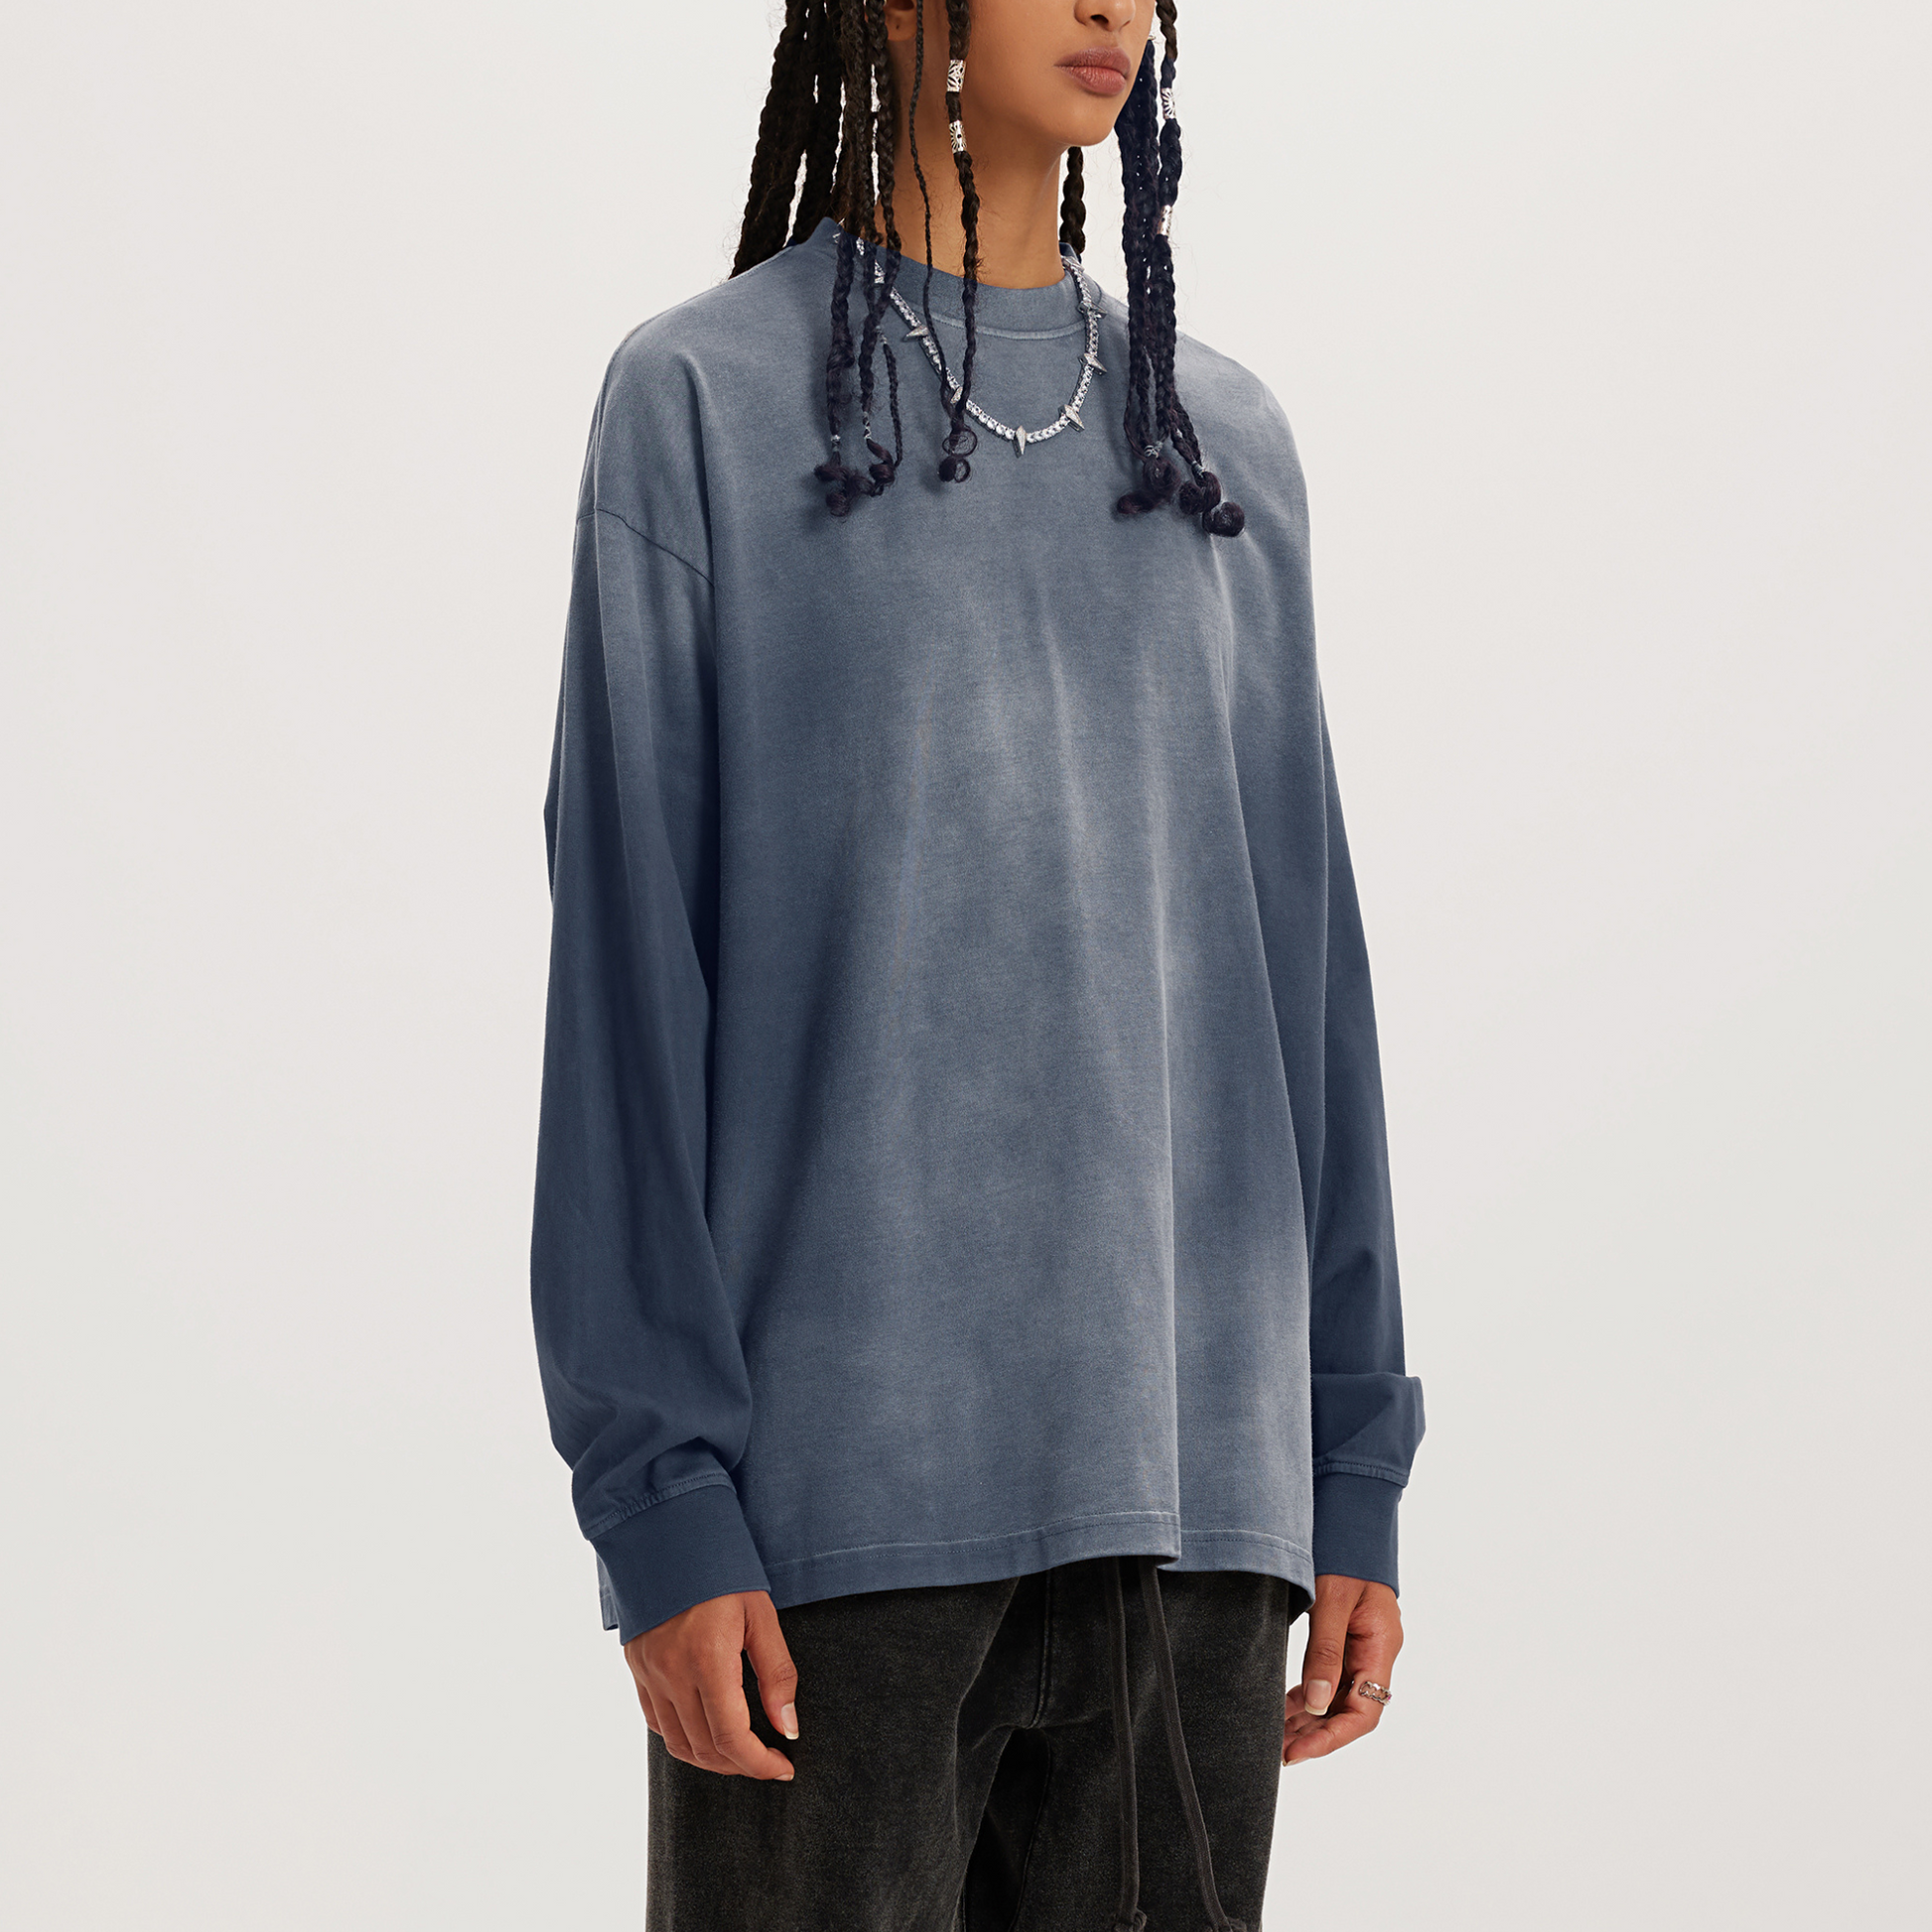 oversized grey crewneck in dyed streetwear aesthetic 